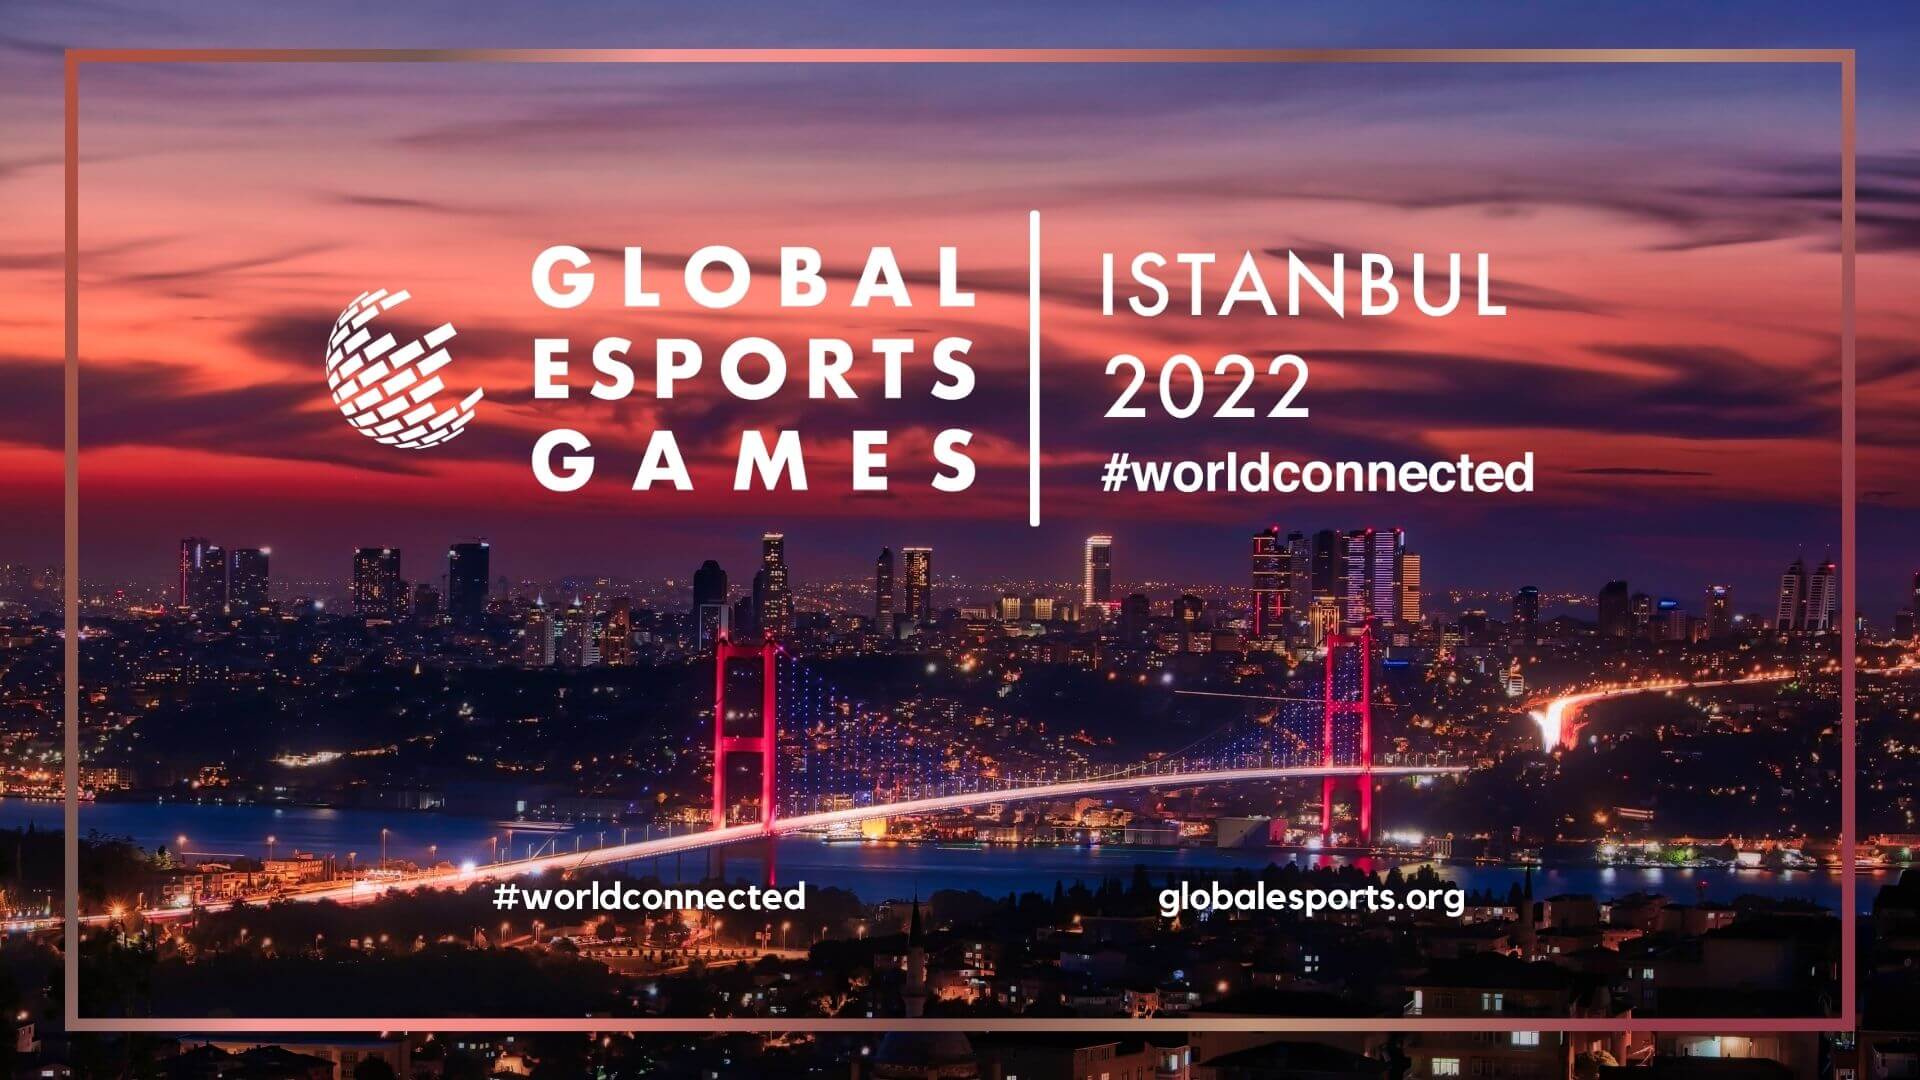 İstanbul'da düzenlenecek Global Esports Games 2022'nin tarihi belli oldu